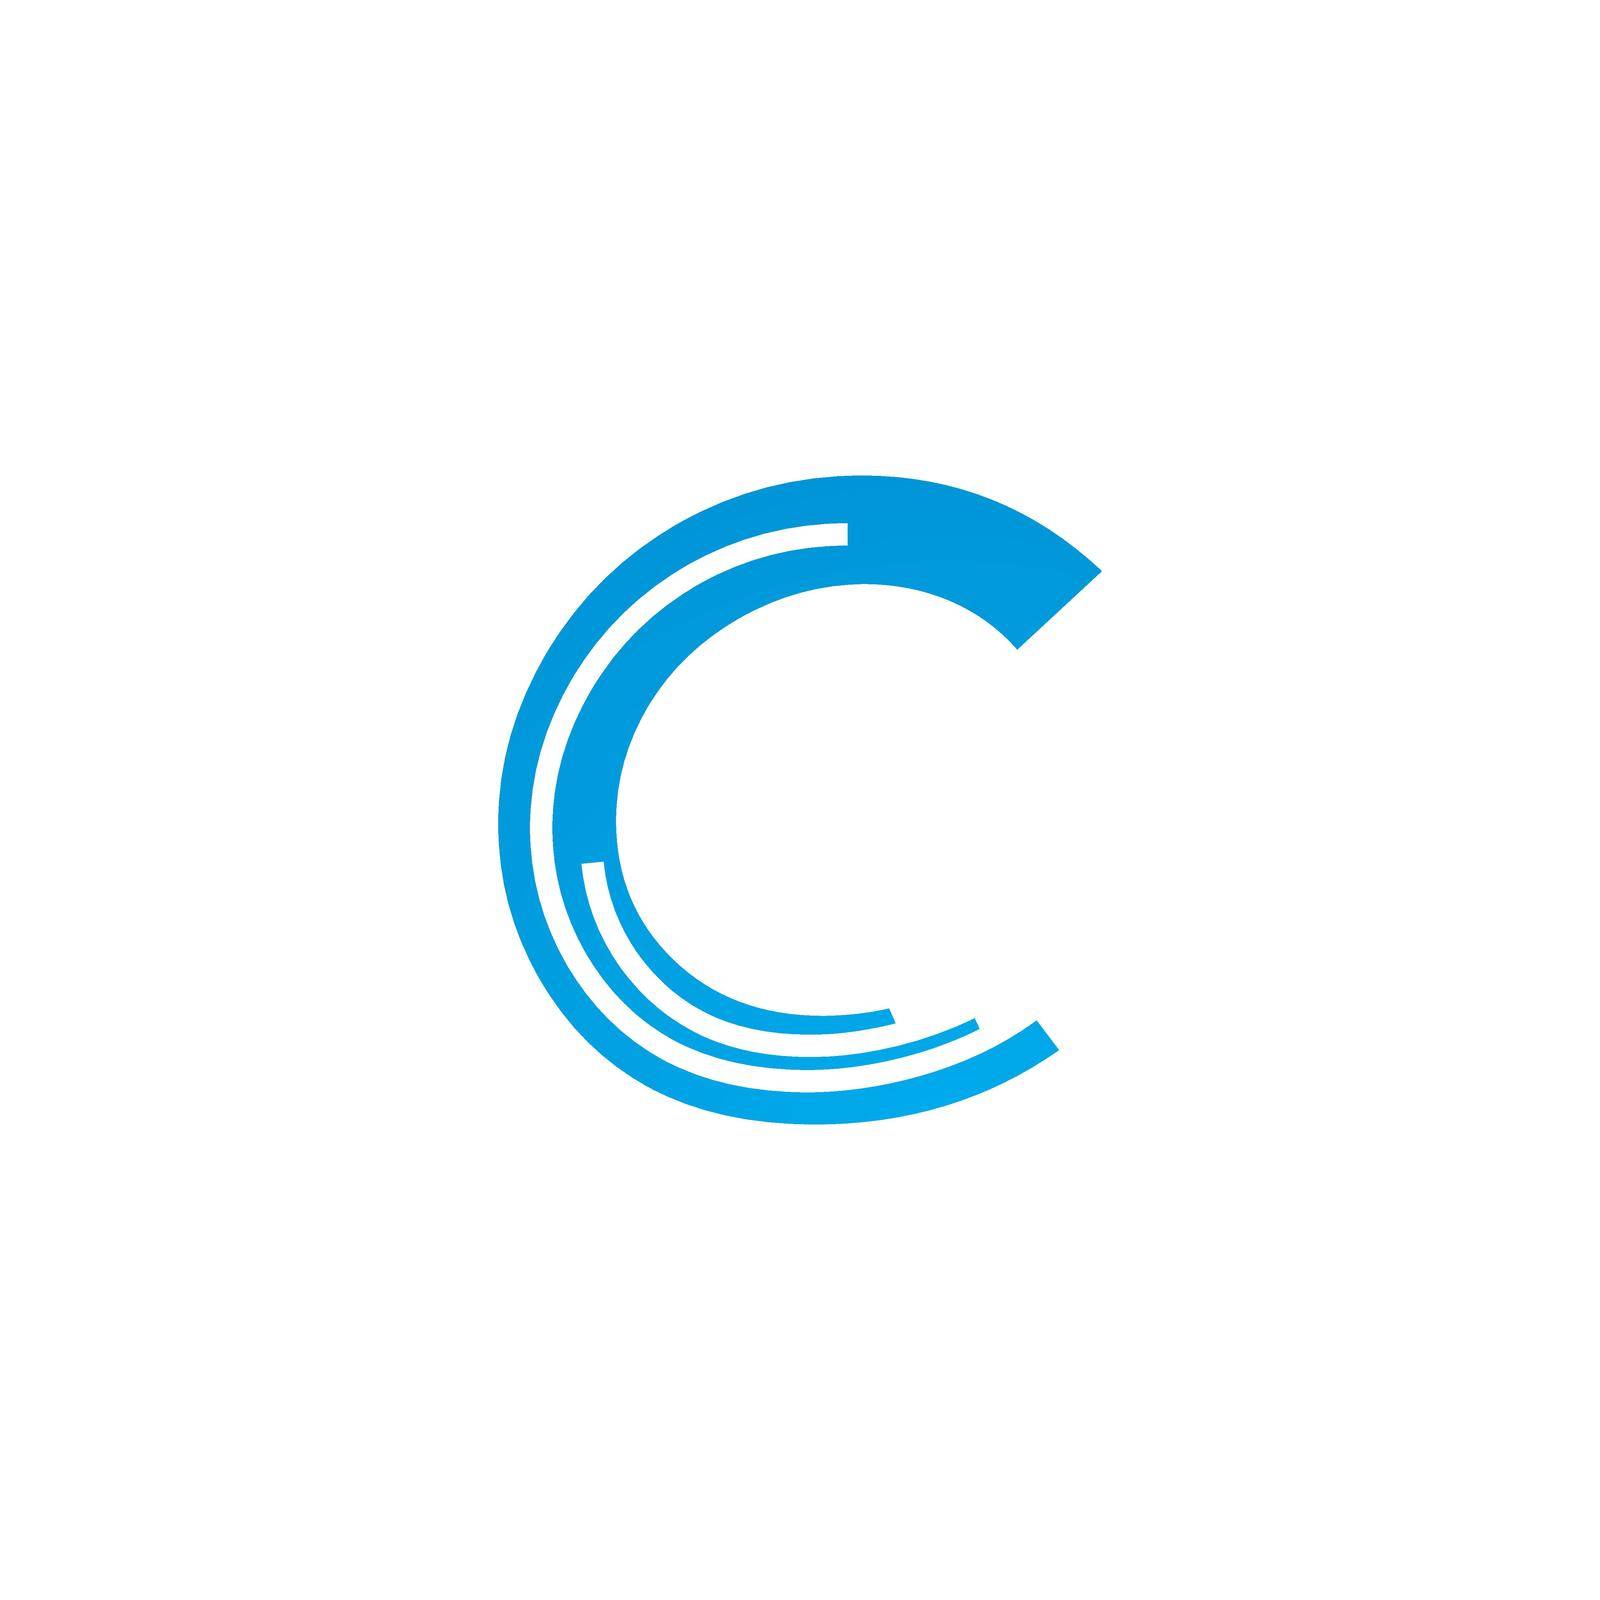 Modern C Initial letter alphabet font logo vector design